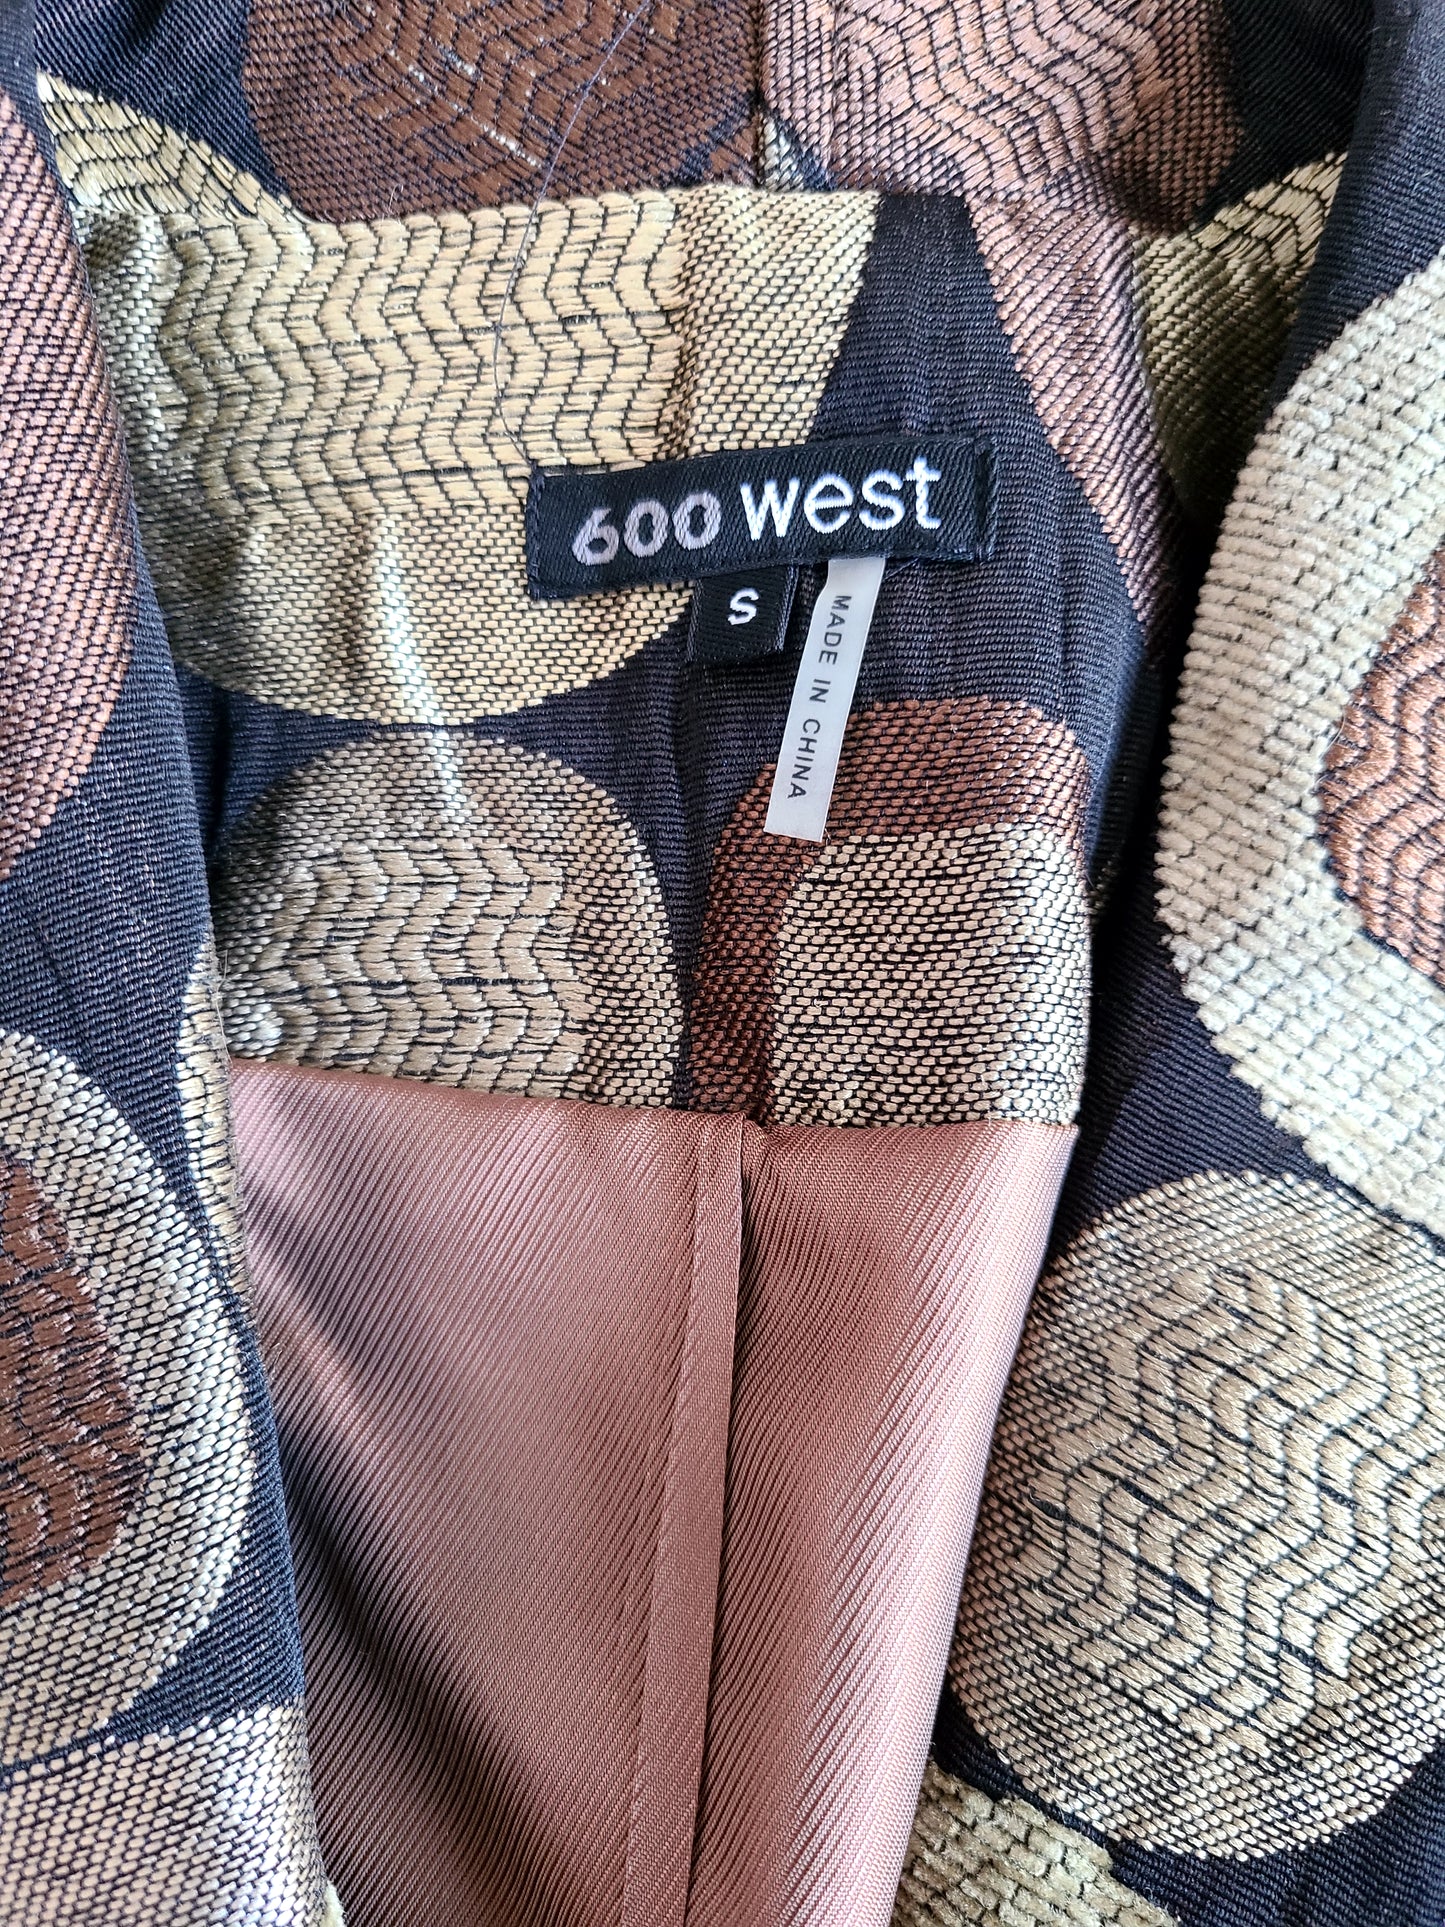 600 West Sixties Print Jacket - Size Small